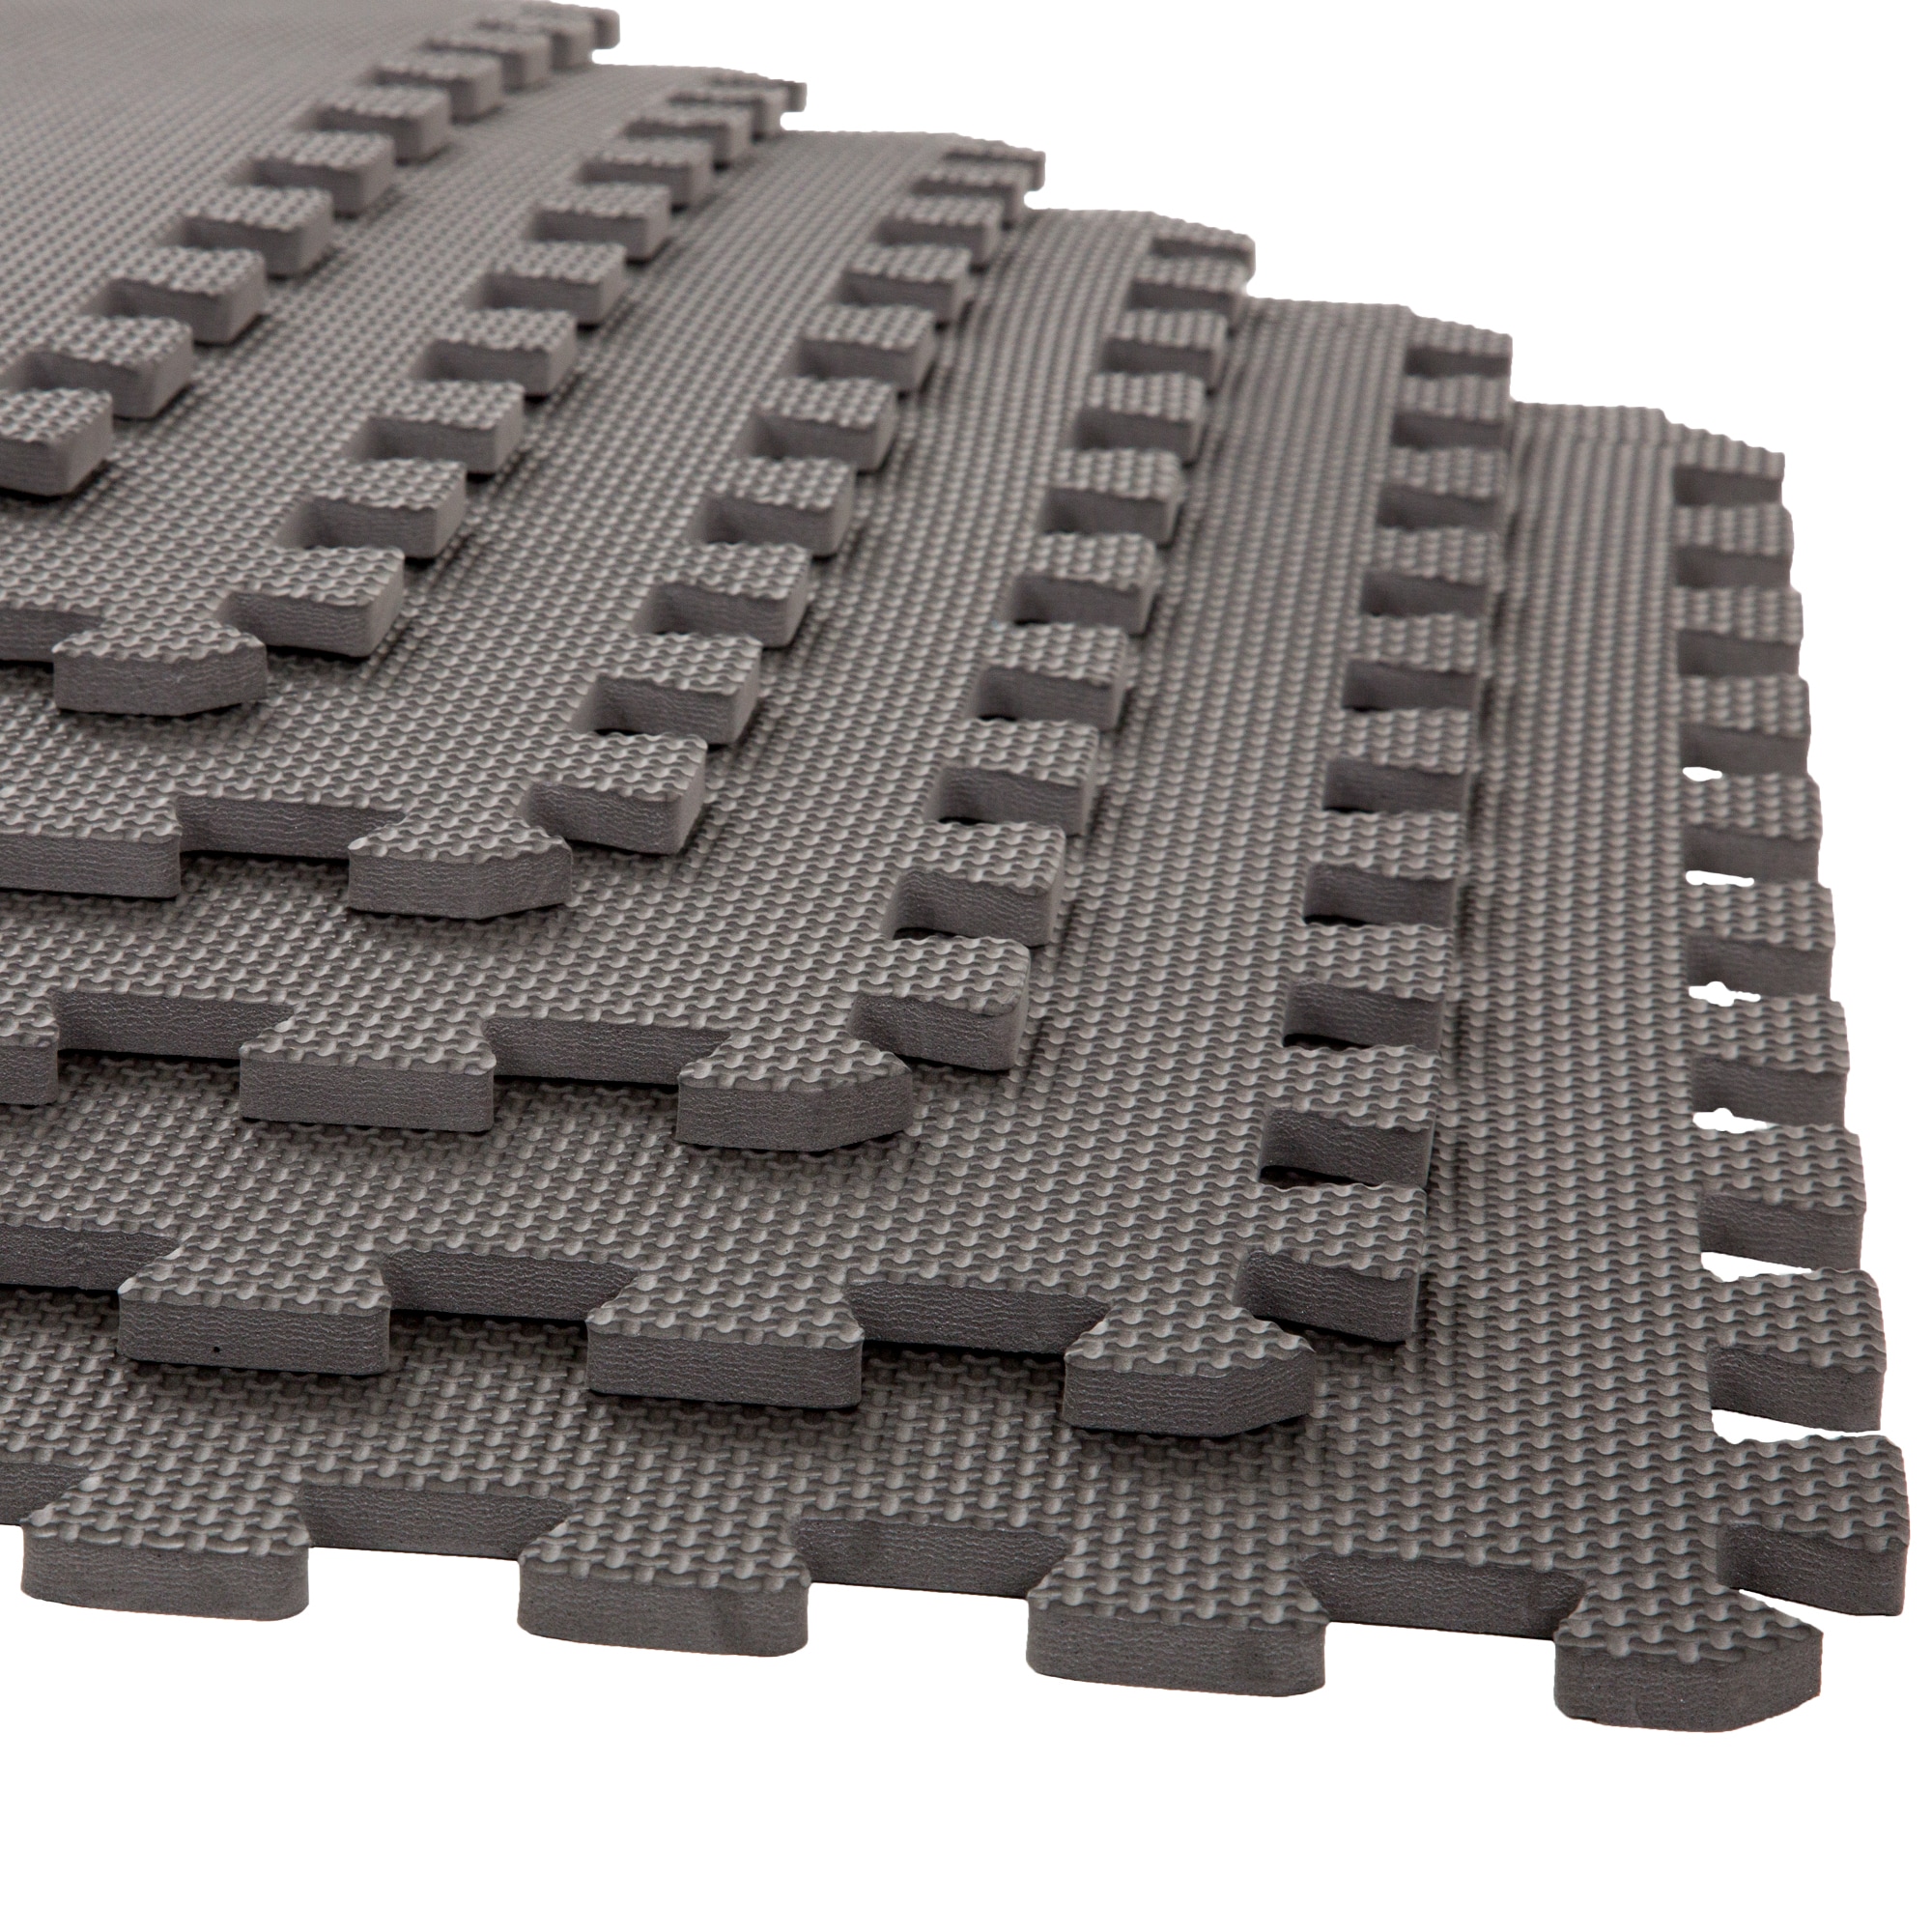 Interlocking Garage Mat Workshop Utility Office Playmat Soft Foam Floor Matting 